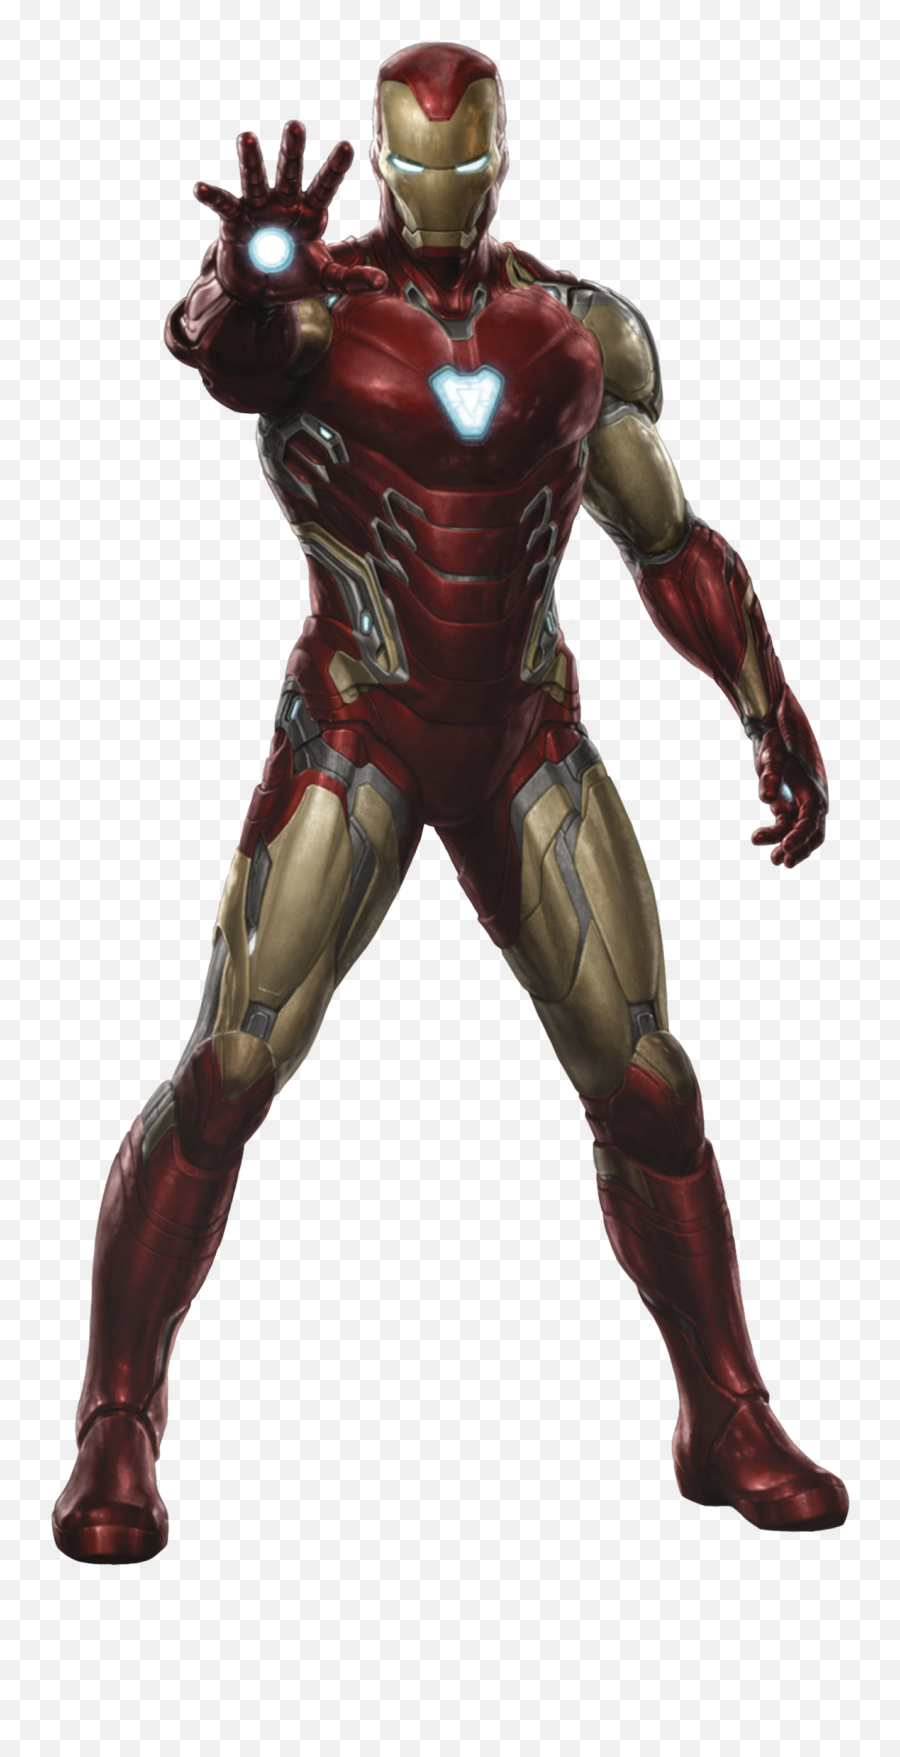 Avengers Endgame Iron Man Png To - Iron Man End Game Png,Iron Man Png